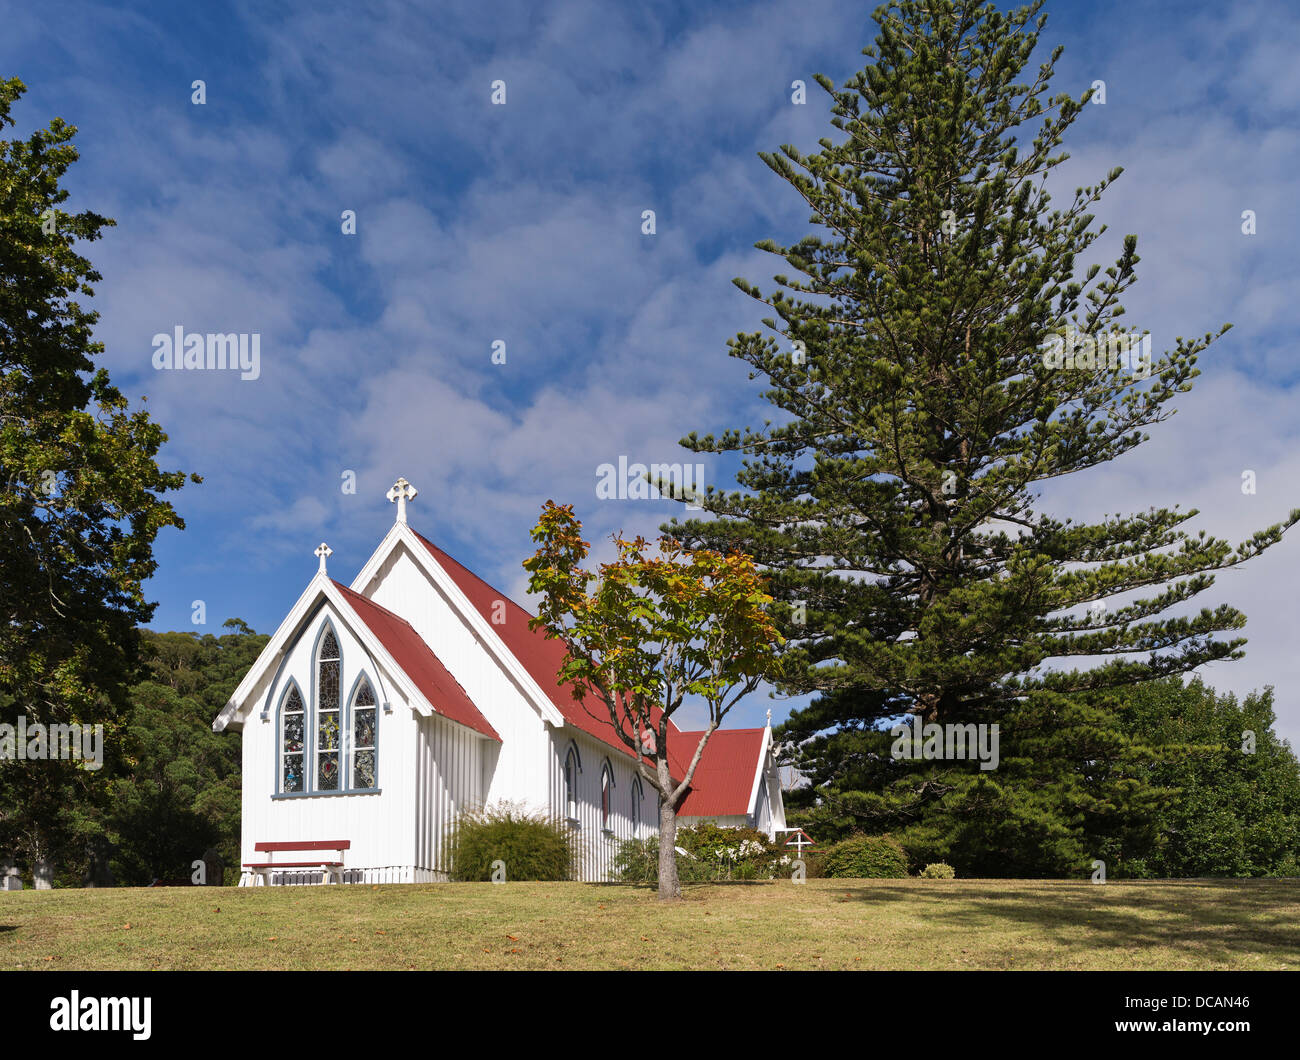 Dh St. James Kirche KERIKERI NEUSEELAND Historischen kolonialen Anglikanische Kirche Bucht der Inseln keri Keri Stockfoto